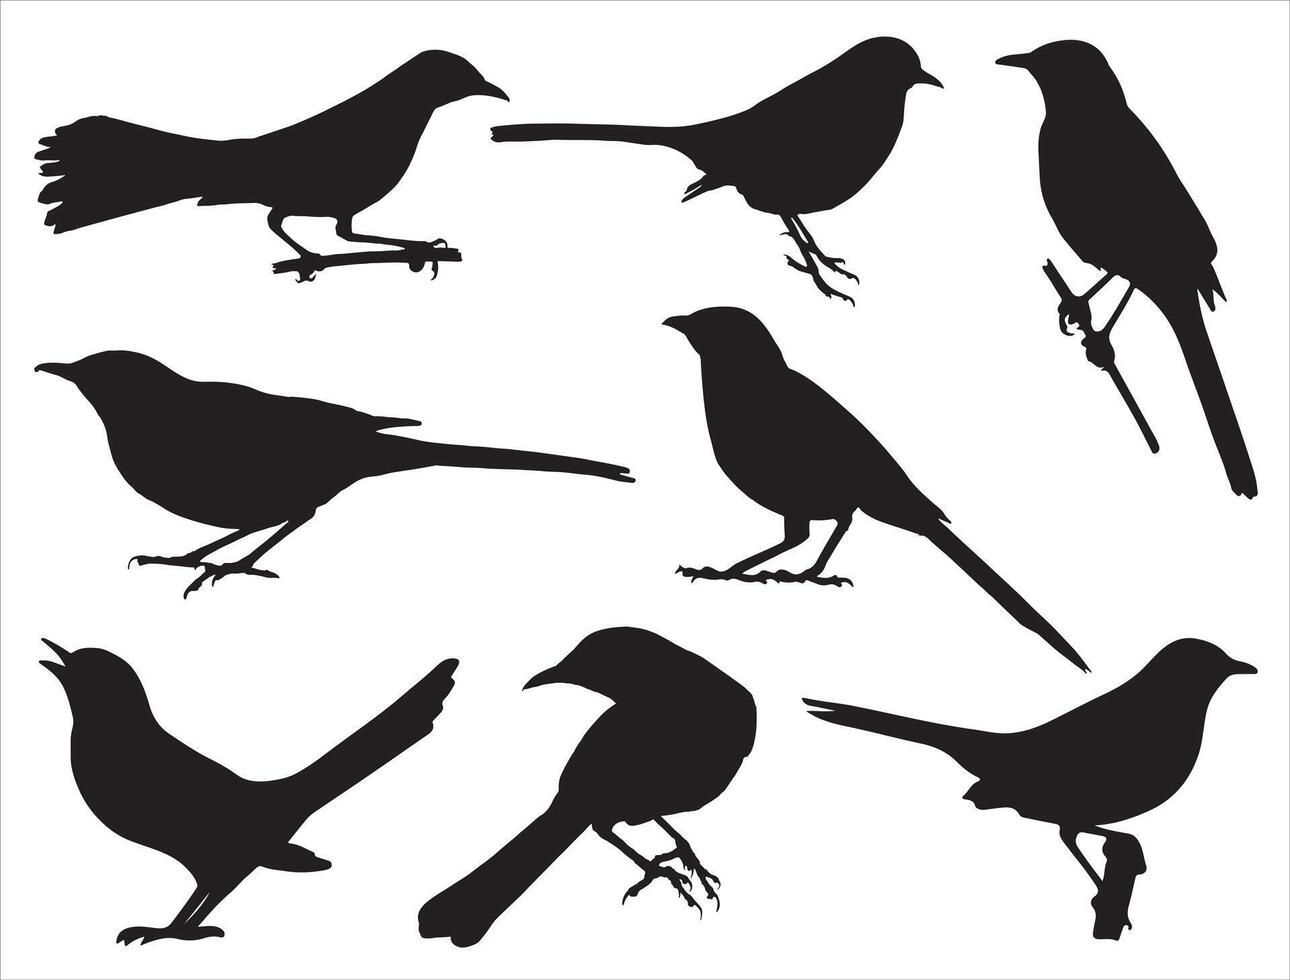 Mocking bird silhouette on white background vector